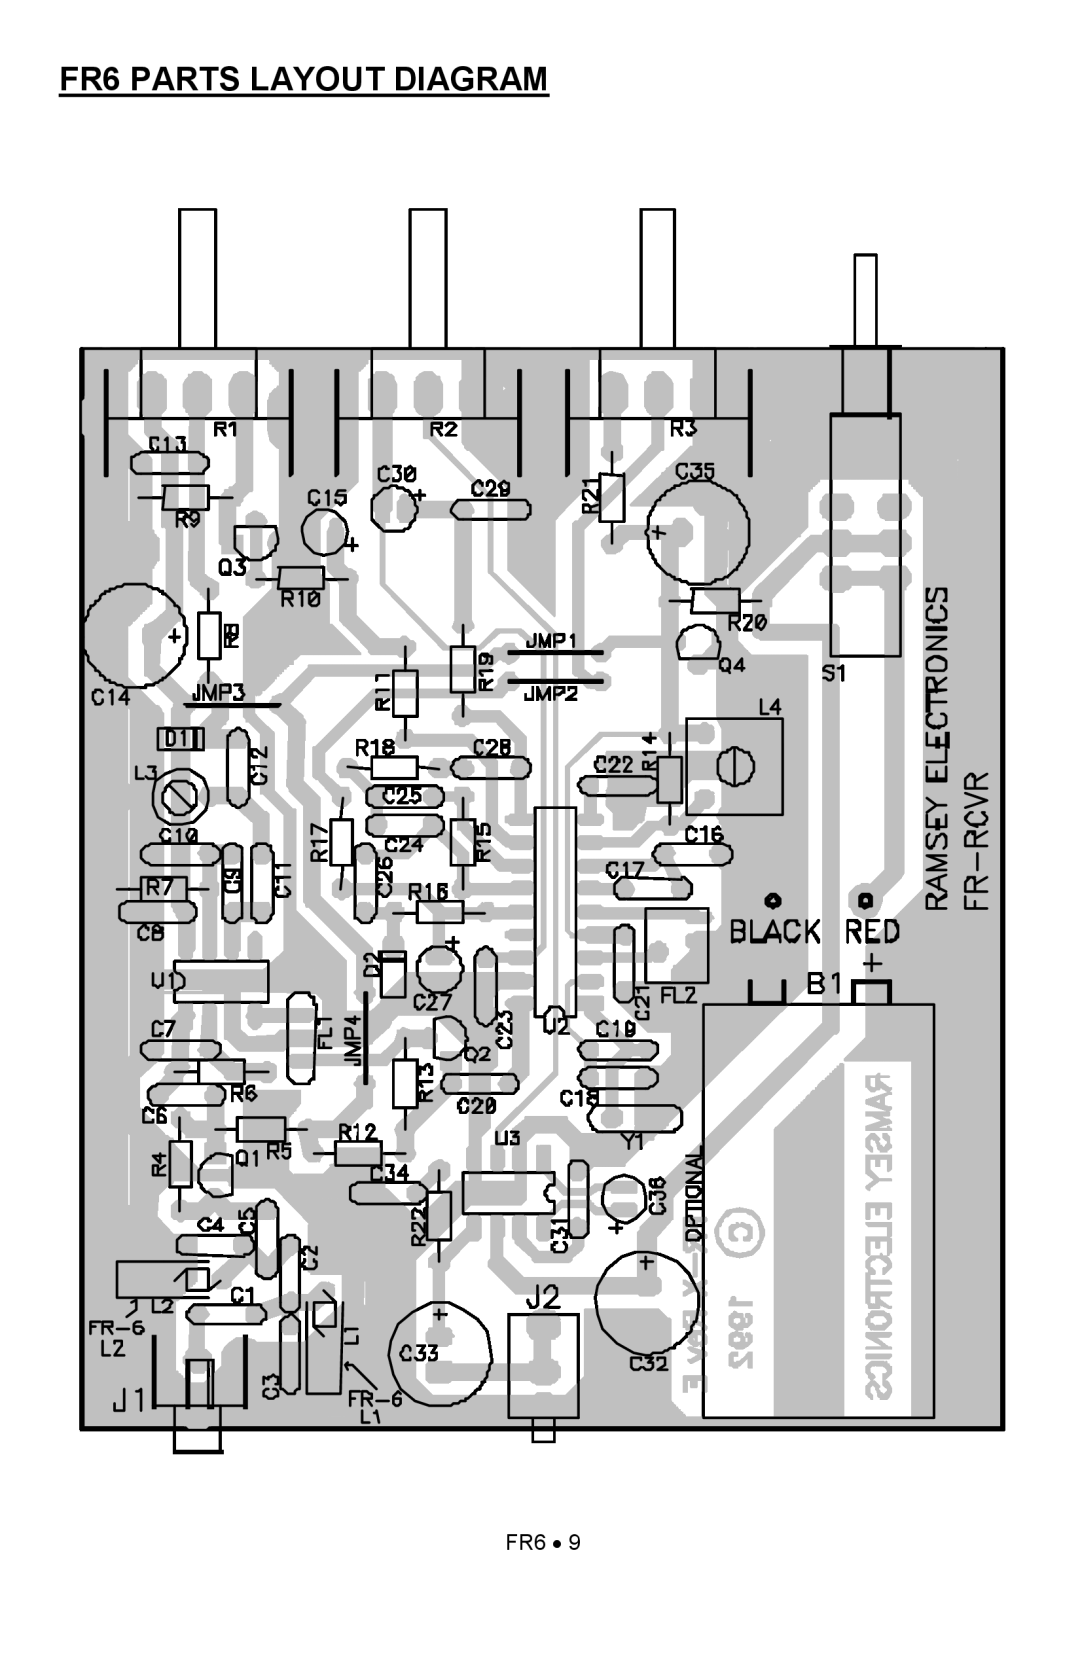 Ramsey Electronics manual FR6 PARTS LAYOUT DIAGRAM 